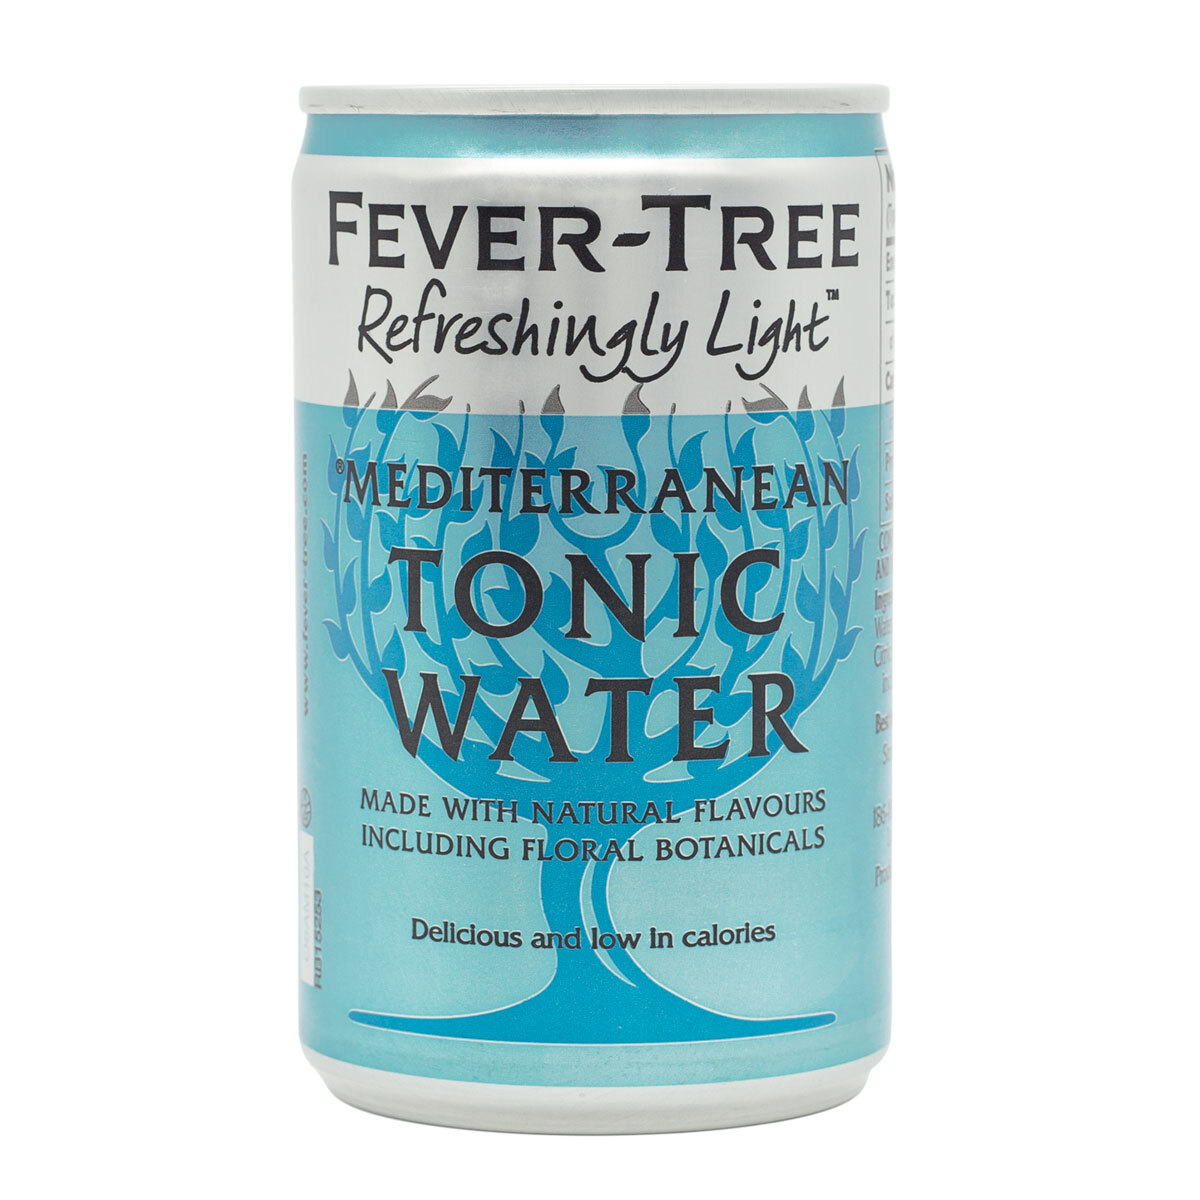 Fever-Tree Refreshingly Light Mediterranean Tonic Water, 30 x 150ml